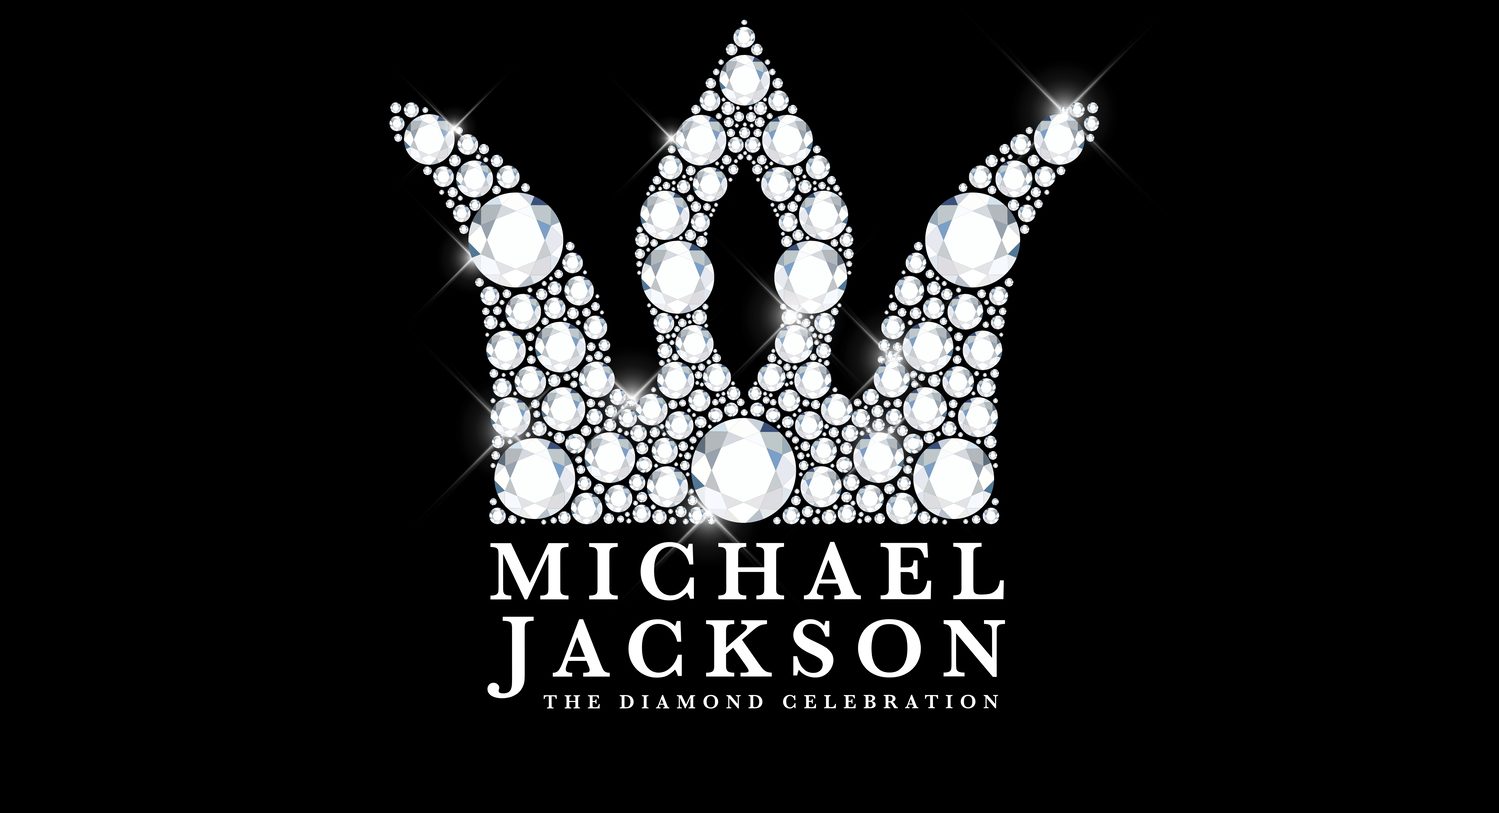 Michael Jackson. Foto: Divulgação